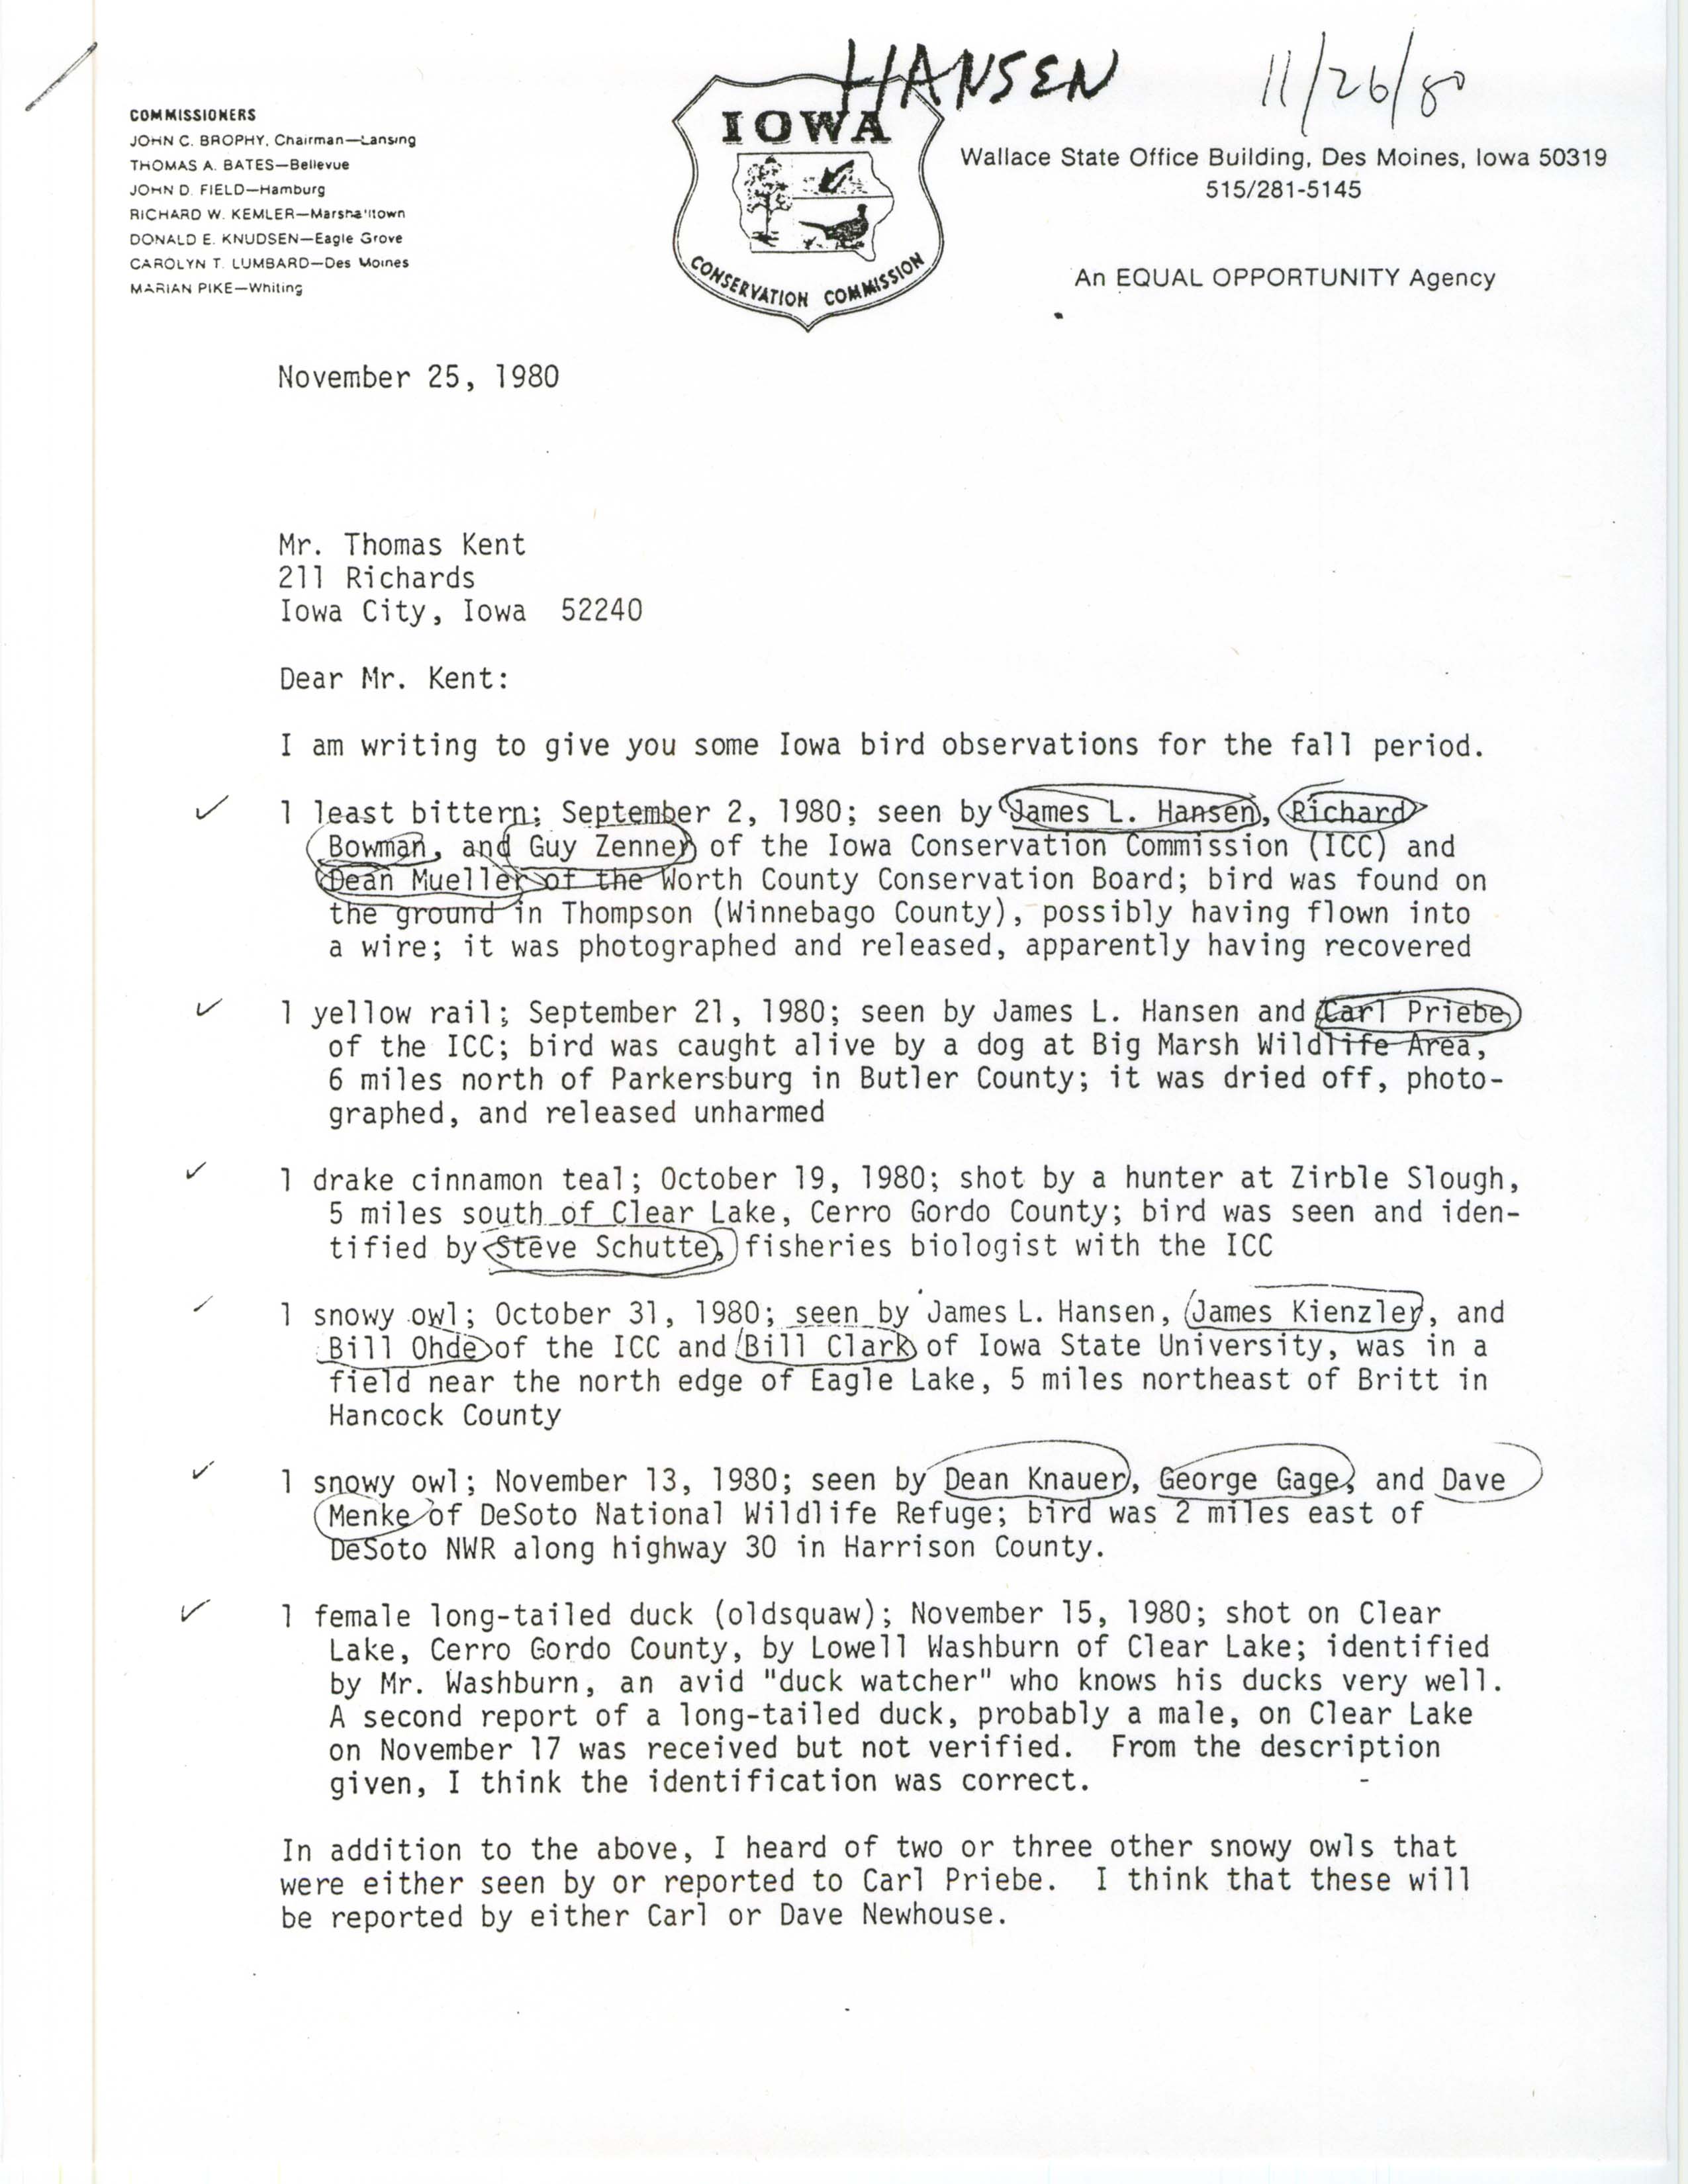 Letter from James L. Hansen to Thomas H. Kent regarding bird sightings, November 25, 1980